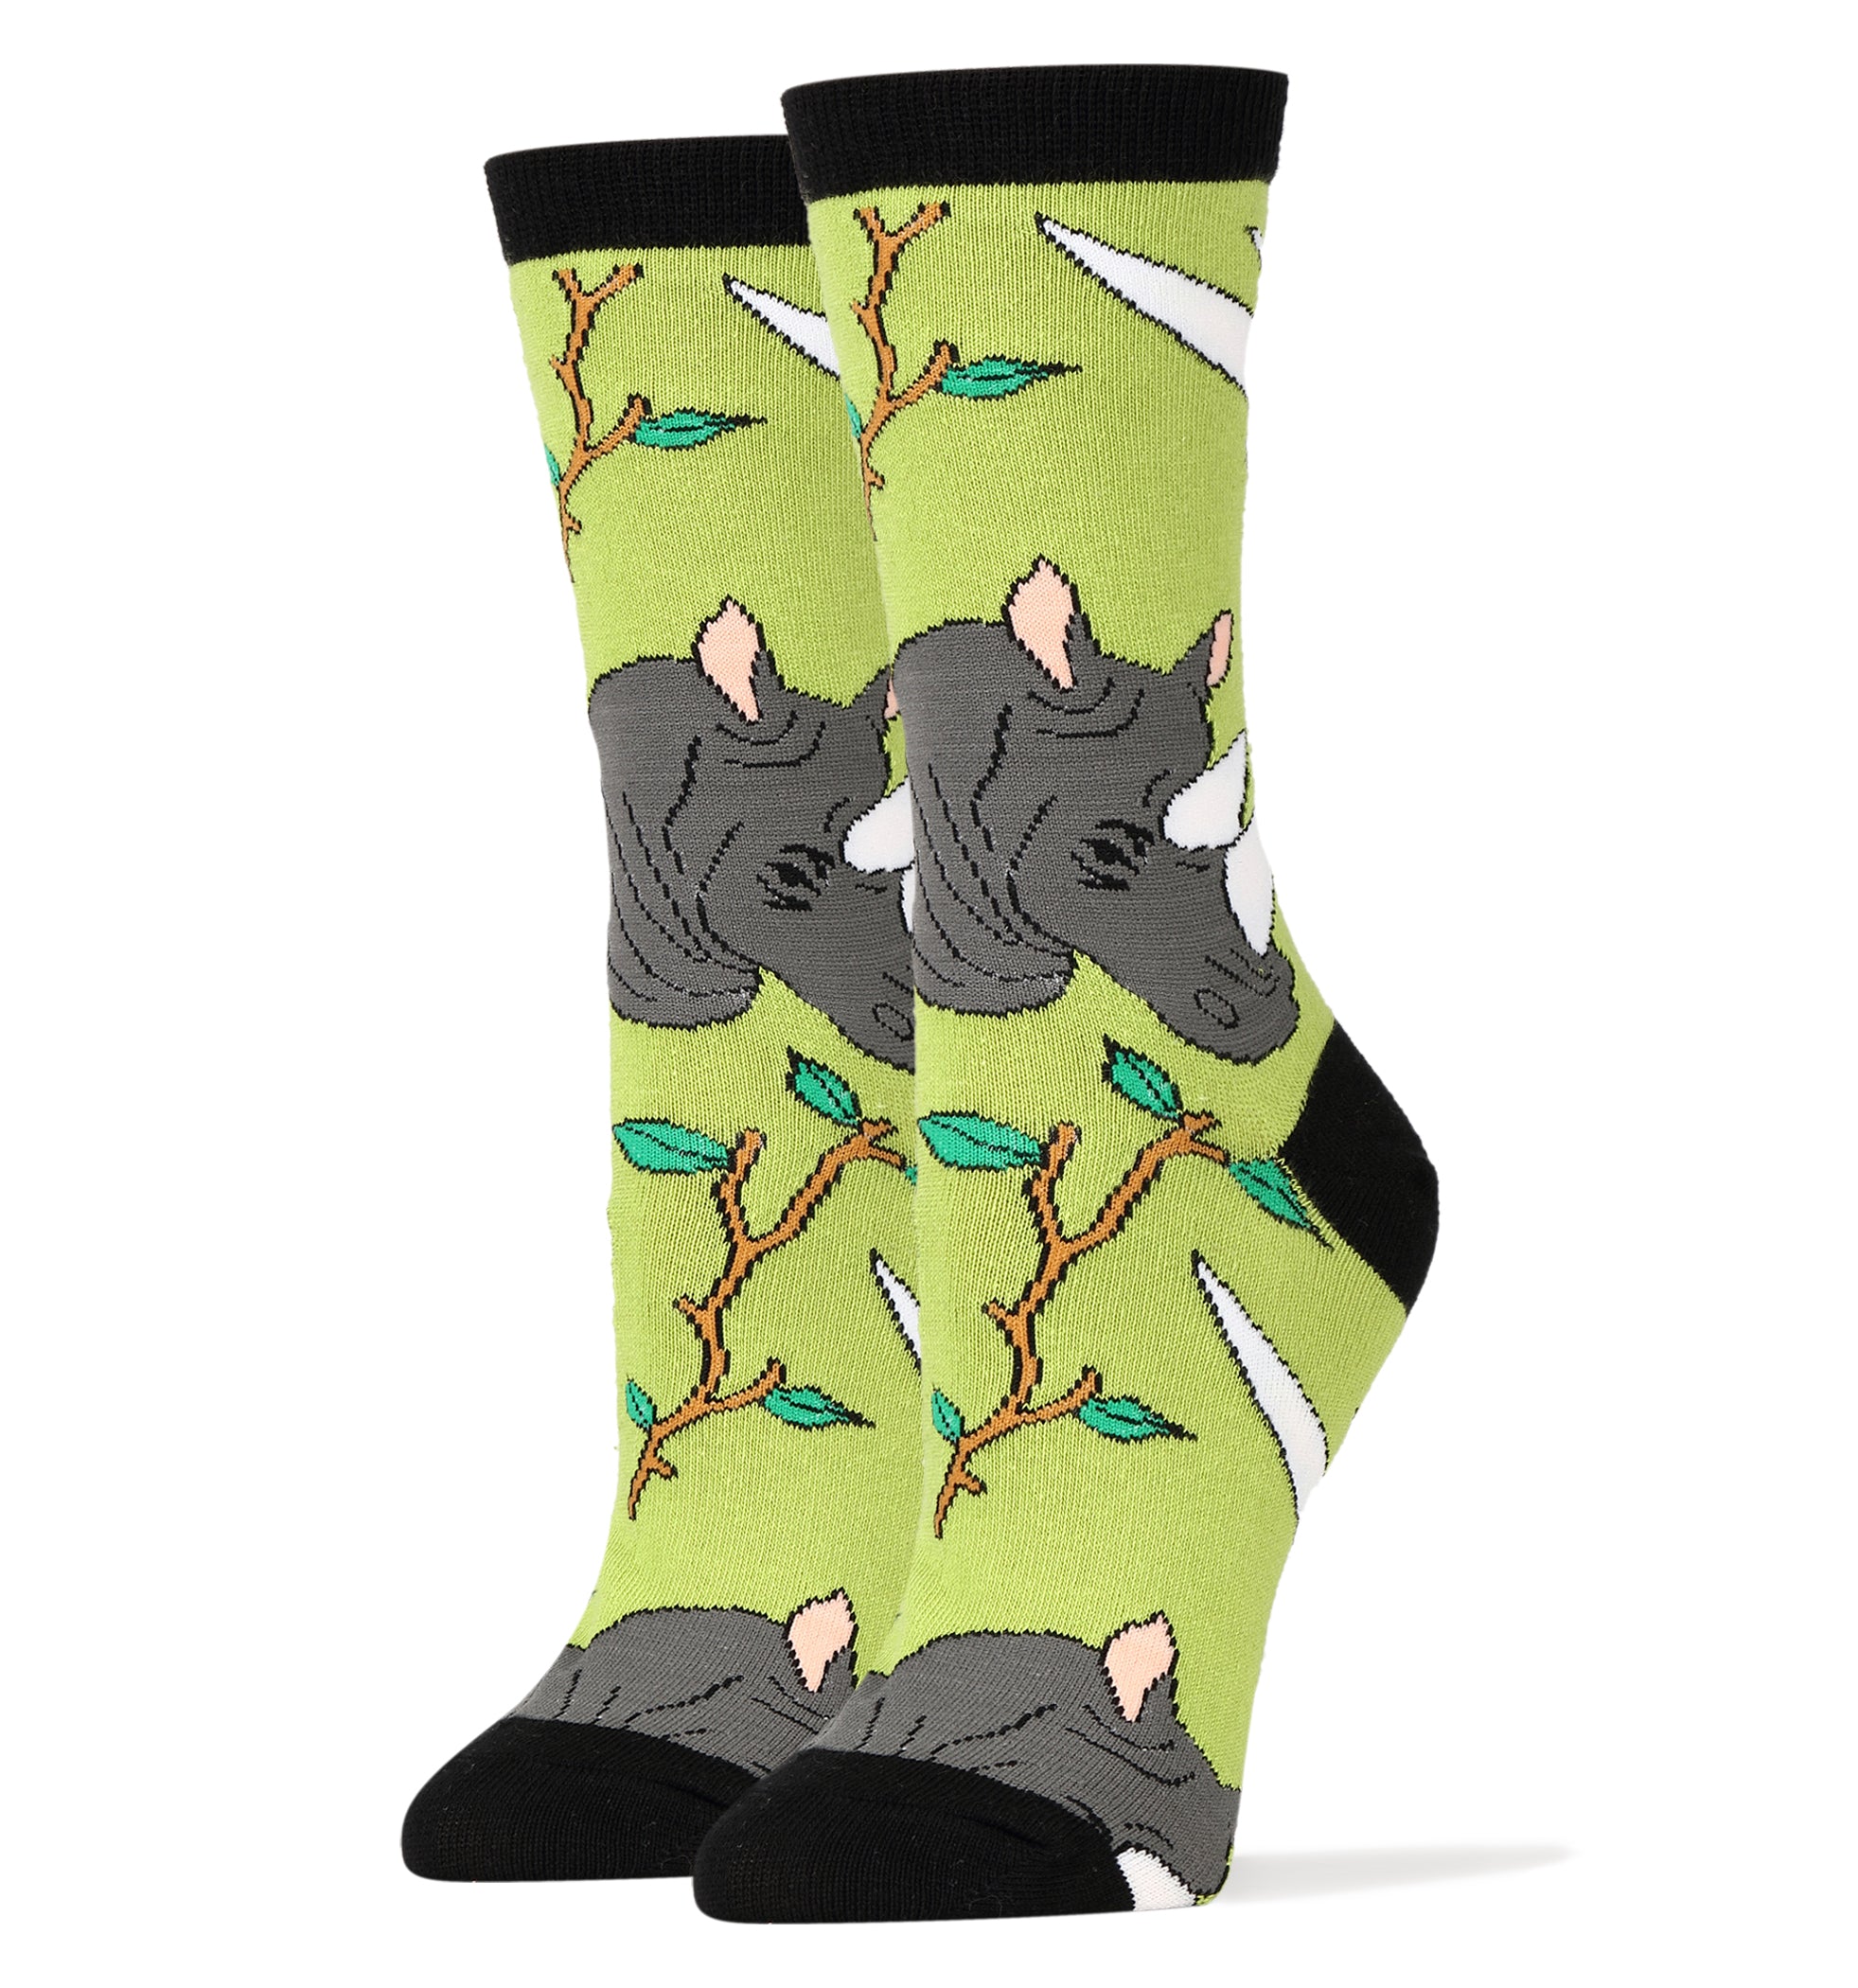 Rhinoz Socks | Novelty Crew Socks For Women